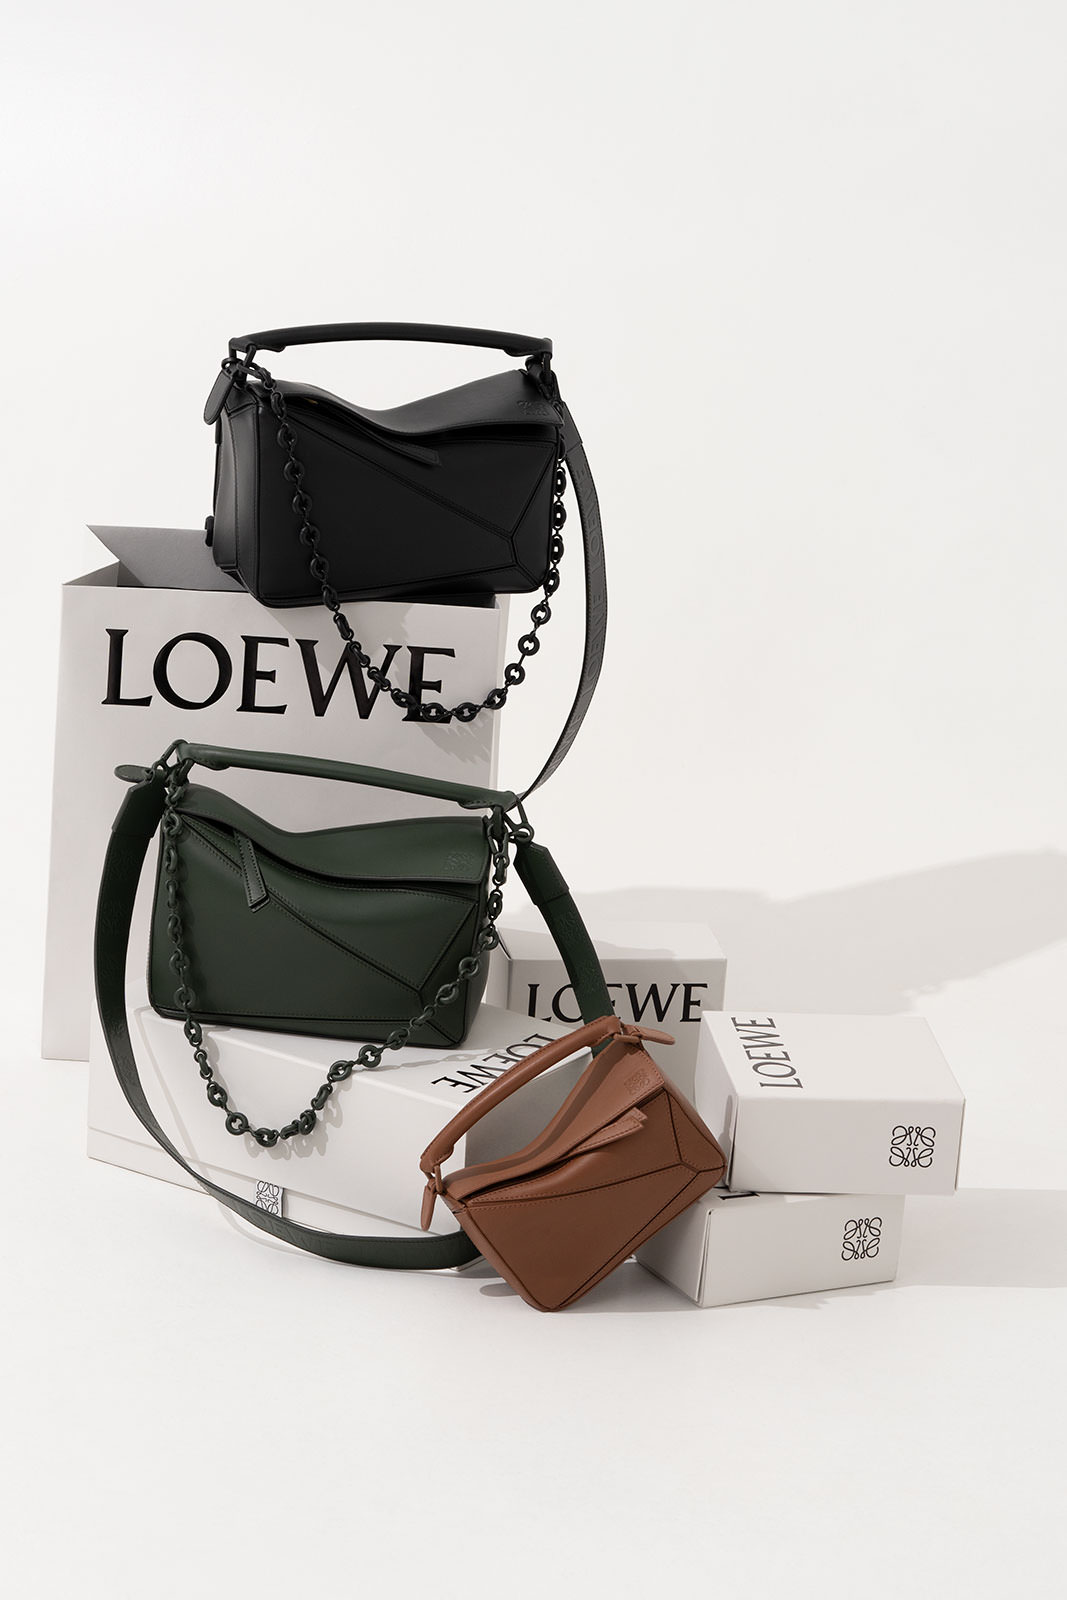 This Loewe Puzzle Bag alternative is just $69 on